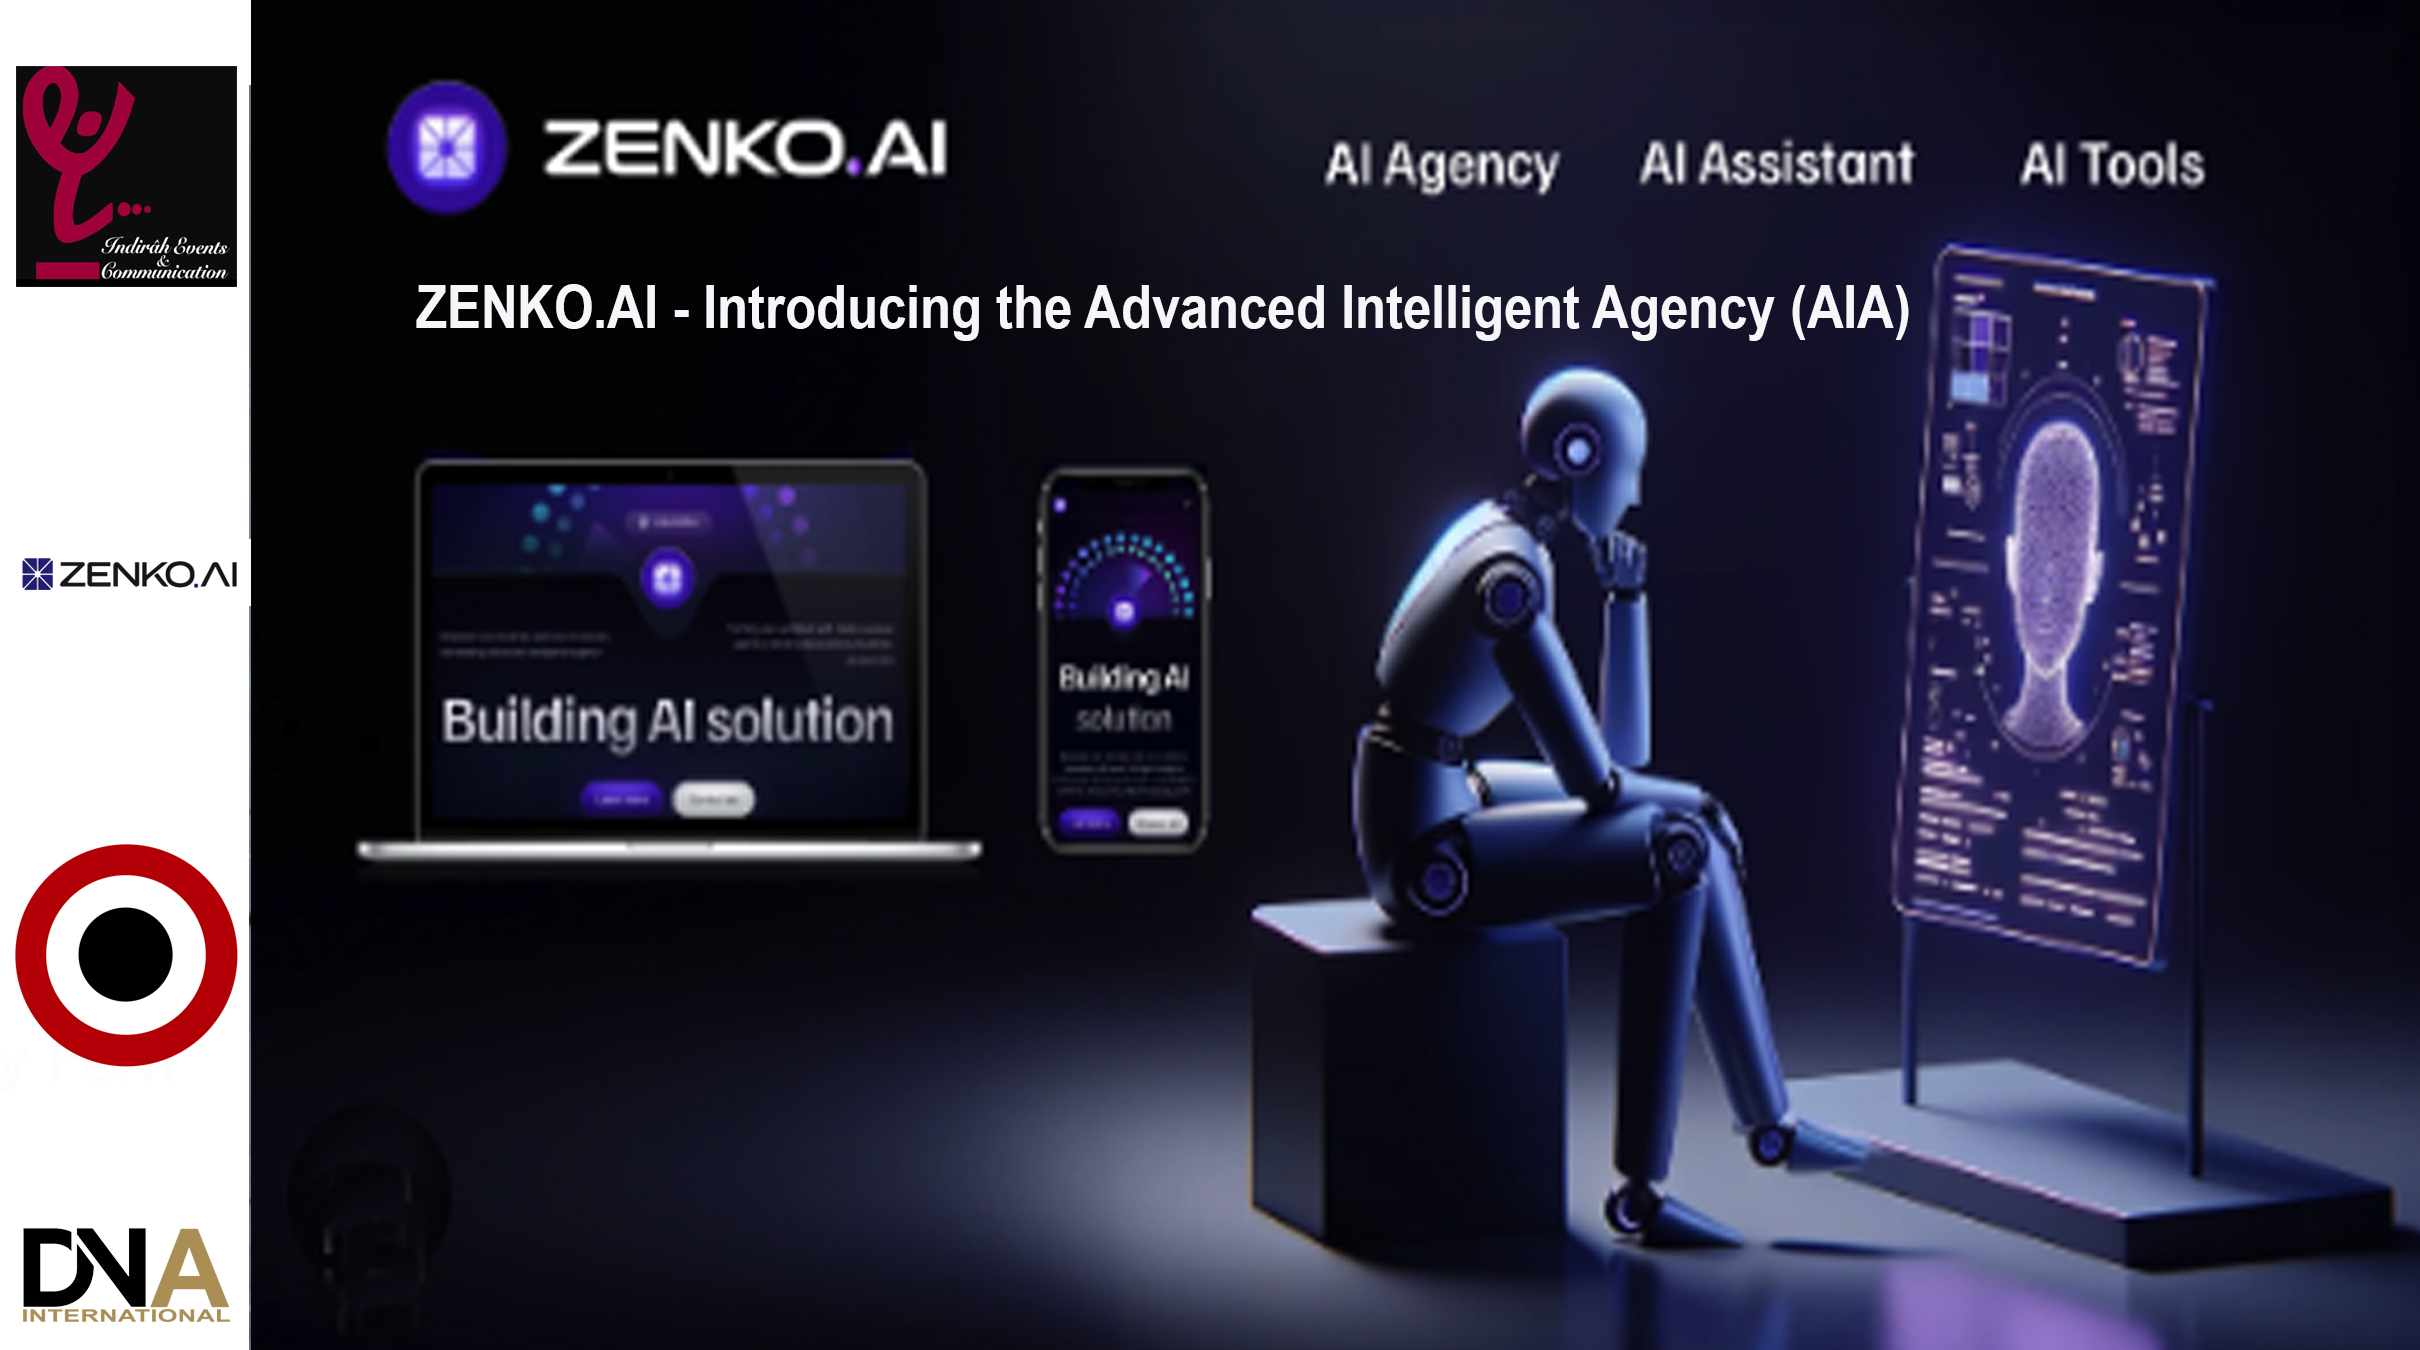 AFRICA-VOGUE-COVER-ZENKO.AI-Introducing-the-Advanced-Intelligent-Agency-AIA-DN-AFRICA-DN-A-INTERNATIONAL-Media-Partenaire - Alegria - Creatio _ No Code Platform